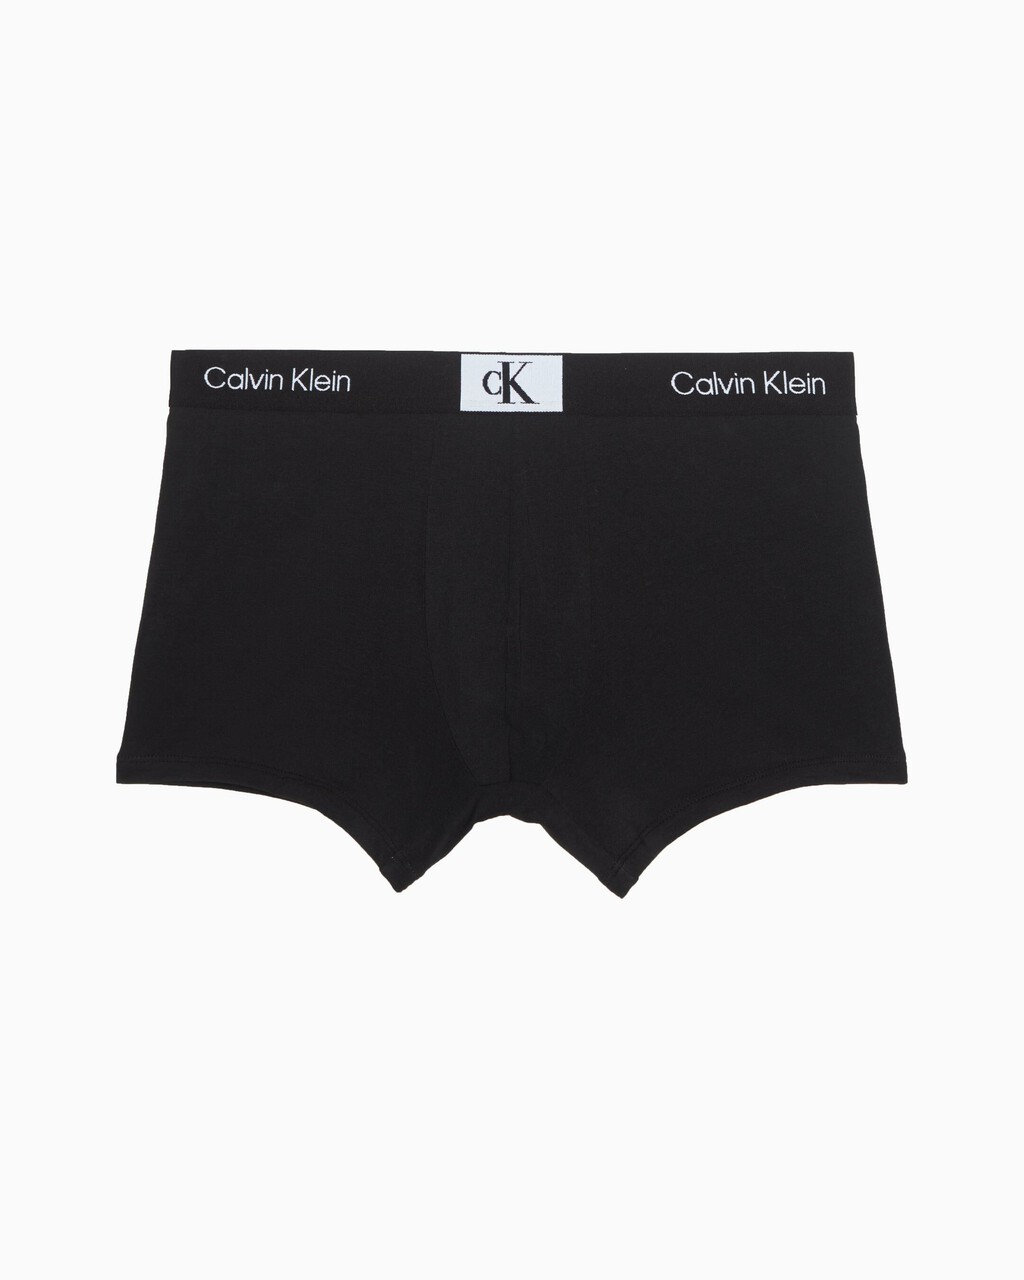 CALVIN KLEIN 1996 平口內褲, Black, hi-res